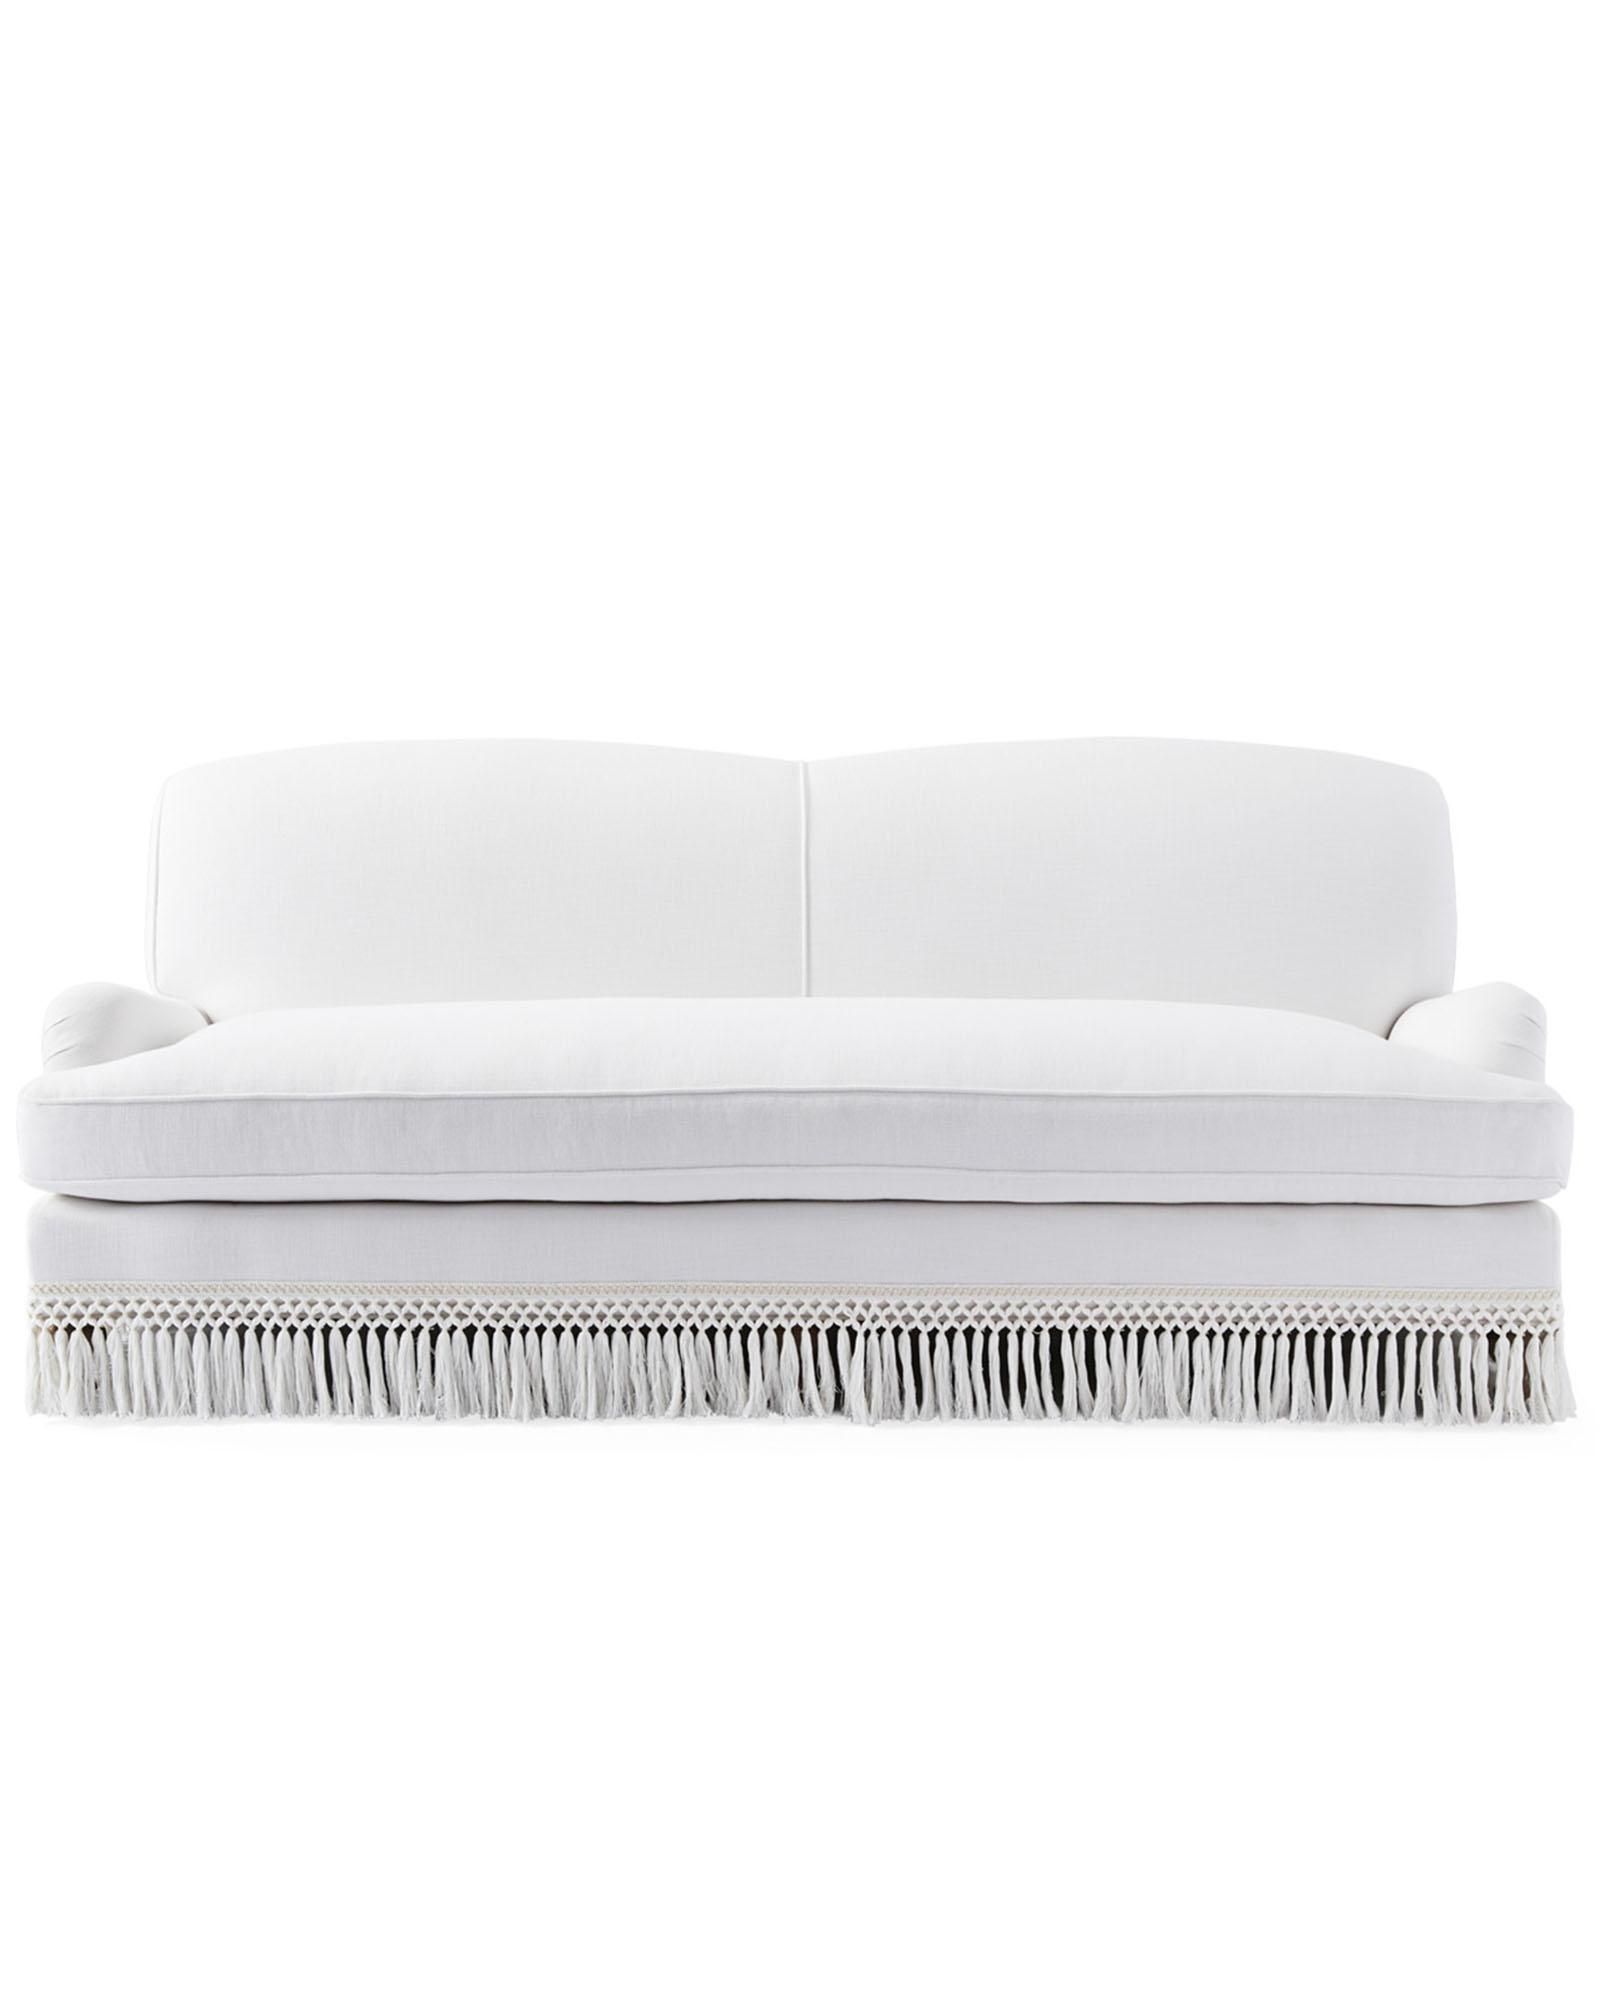 Miramar Fringed Sofa - Perennials White Basketweave | Serena and Lily